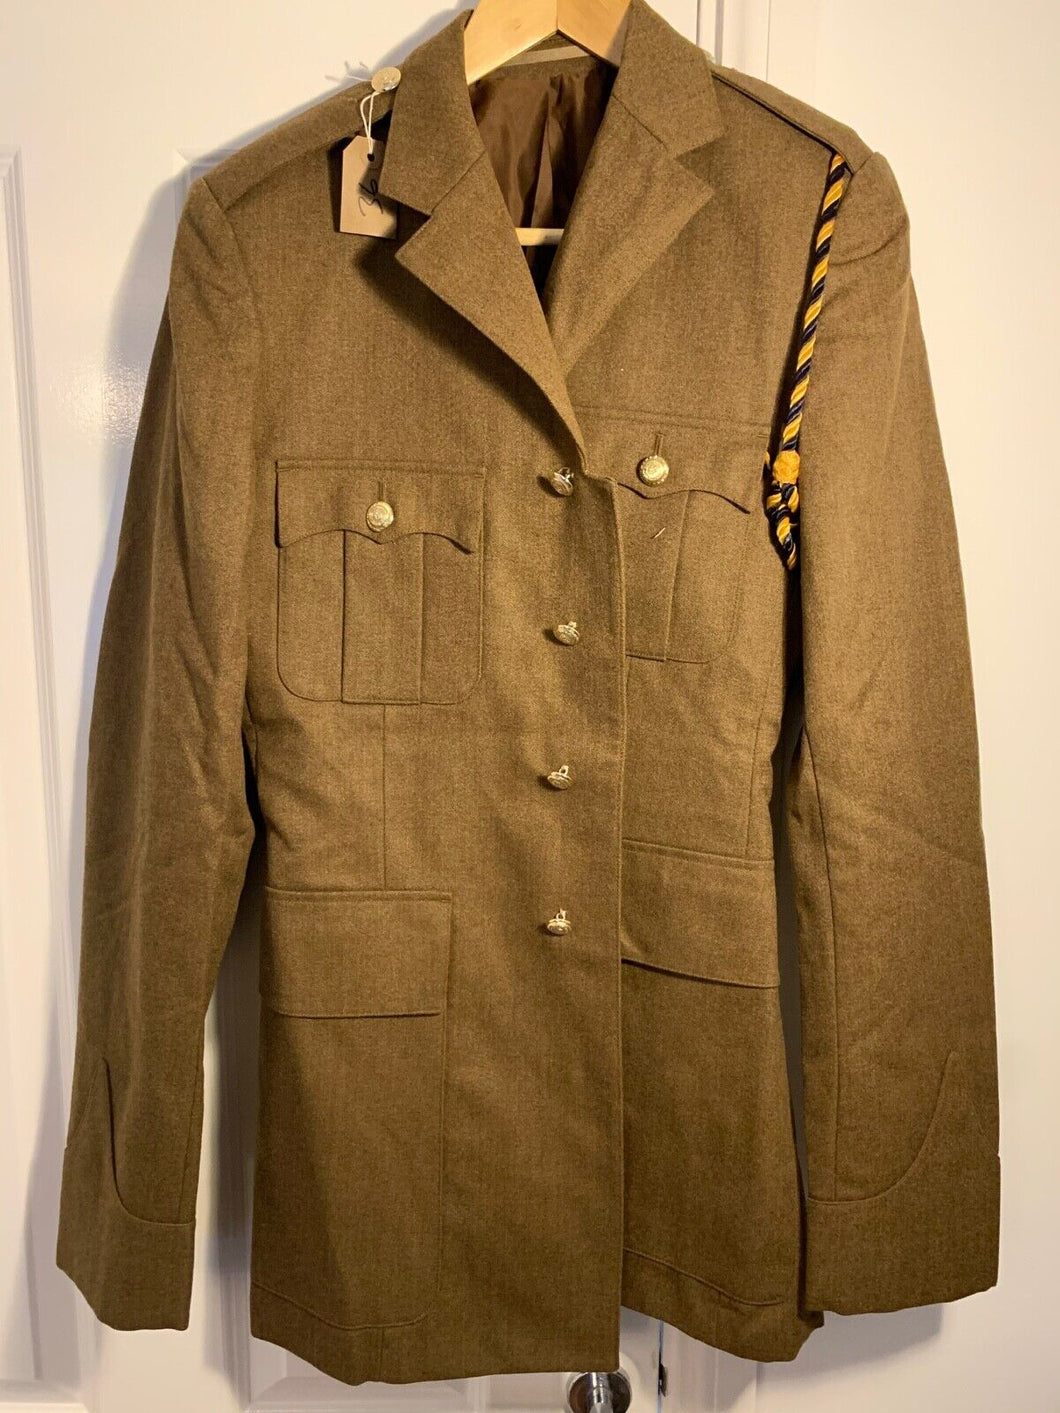 British Army No 2 Dress Uniform Jacket / Tunic Badged - Royal Engineers - #36